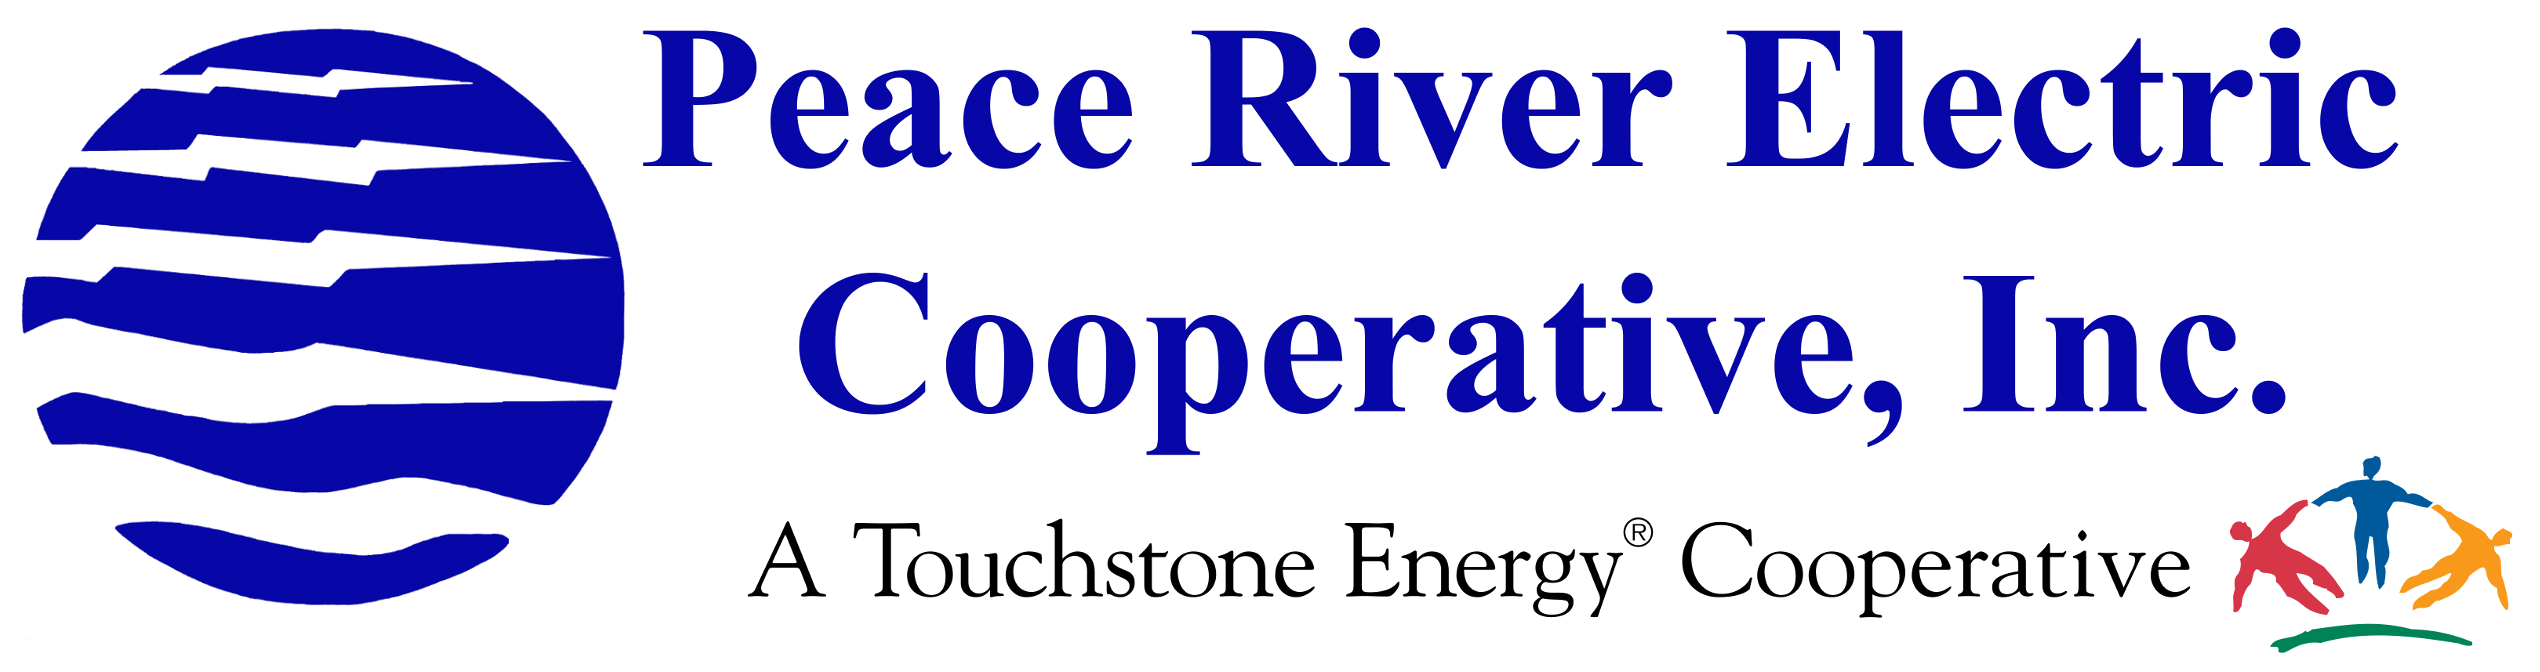 Peace River Electric Cooperative Inc 